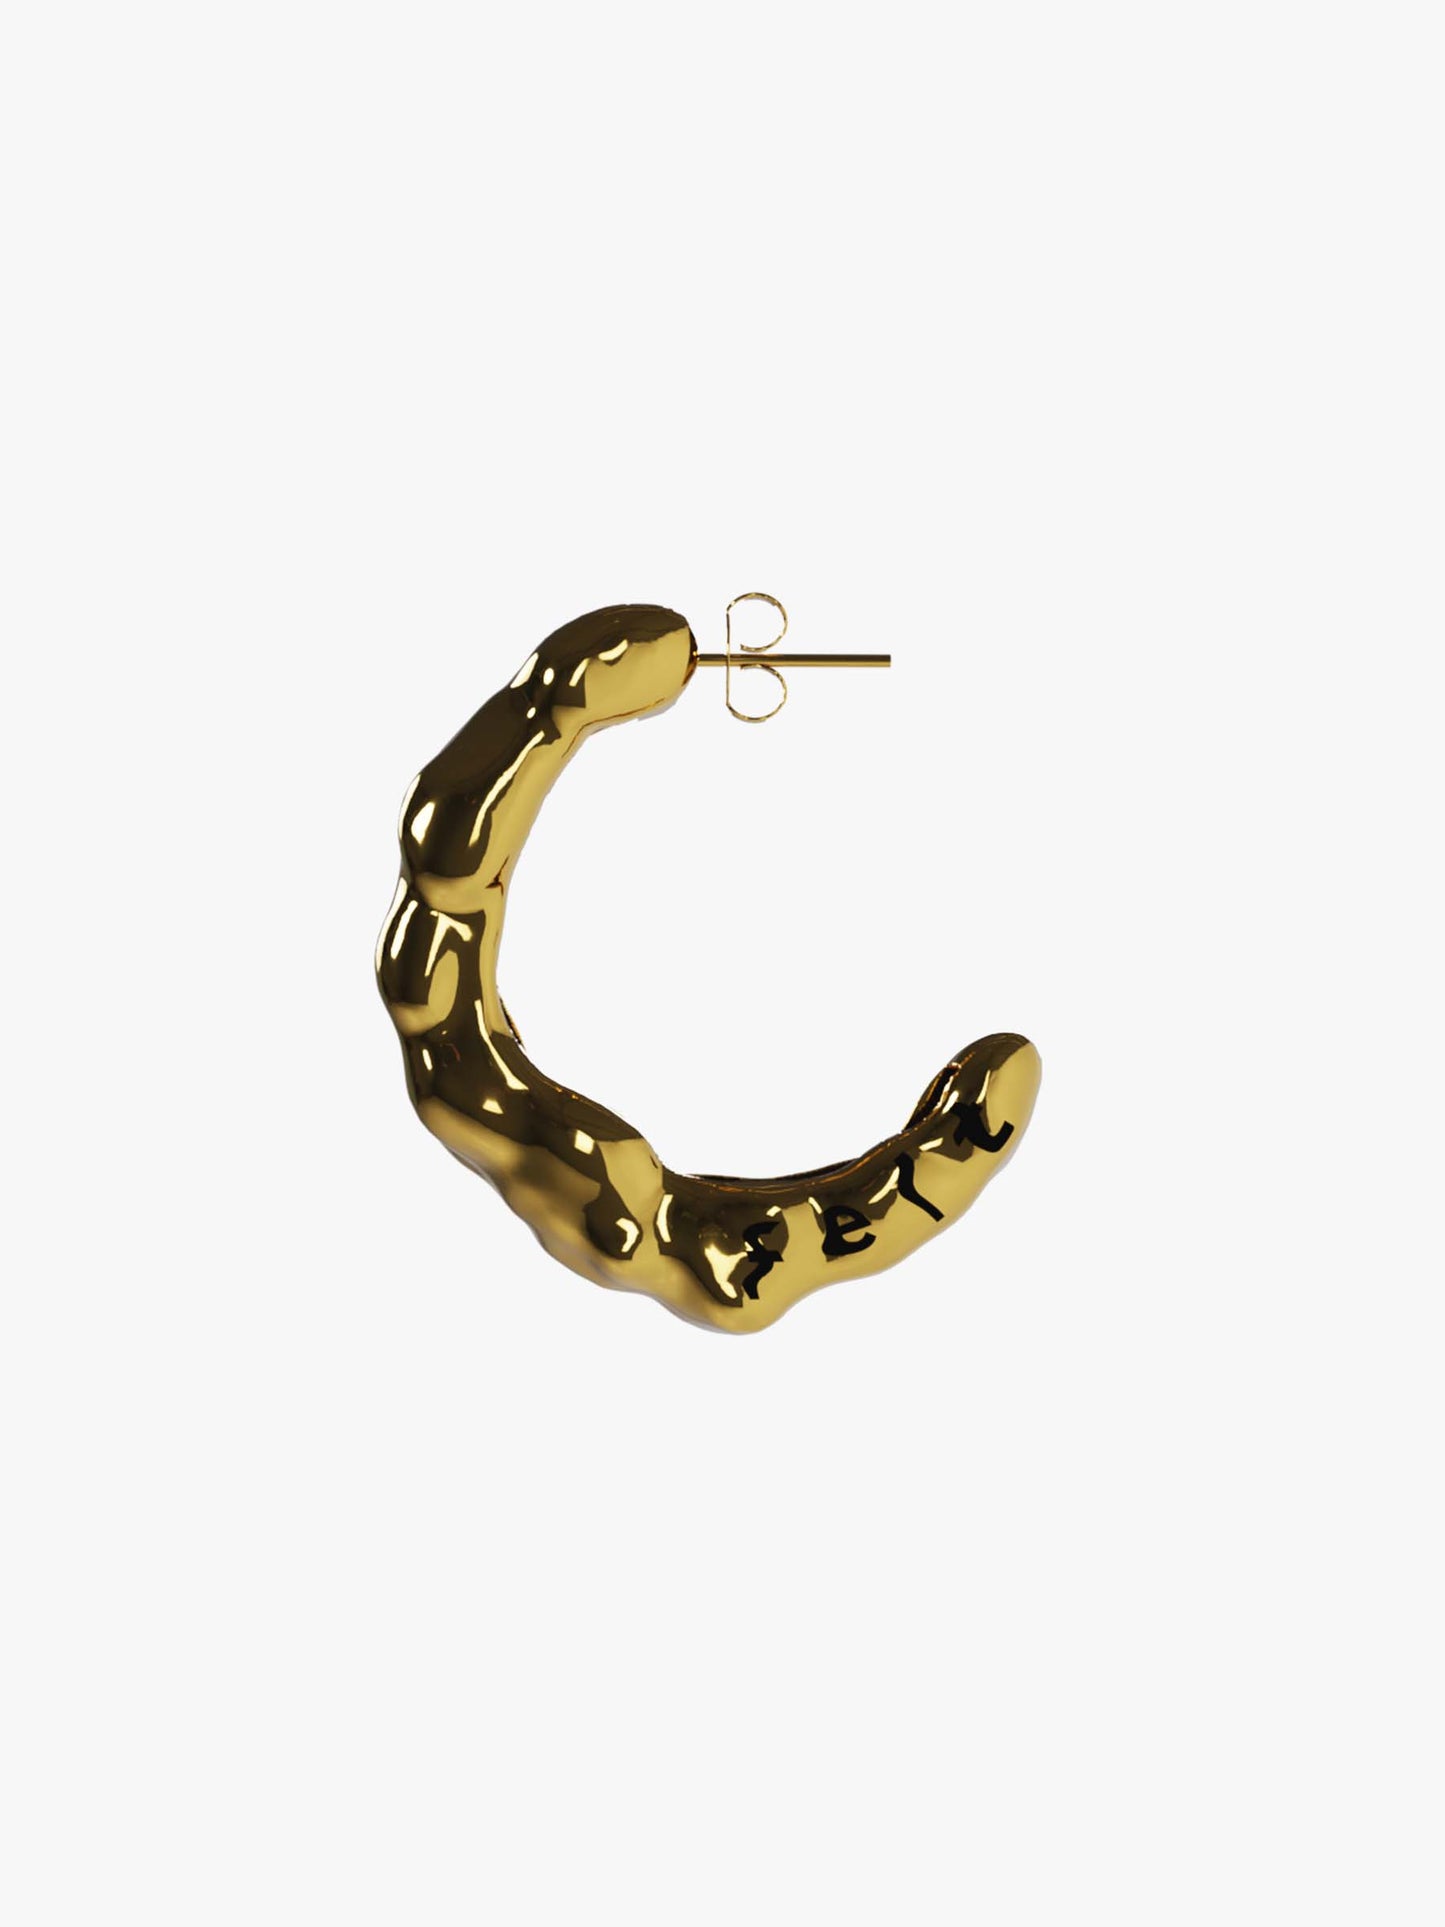 Uzai gold earring (pair)